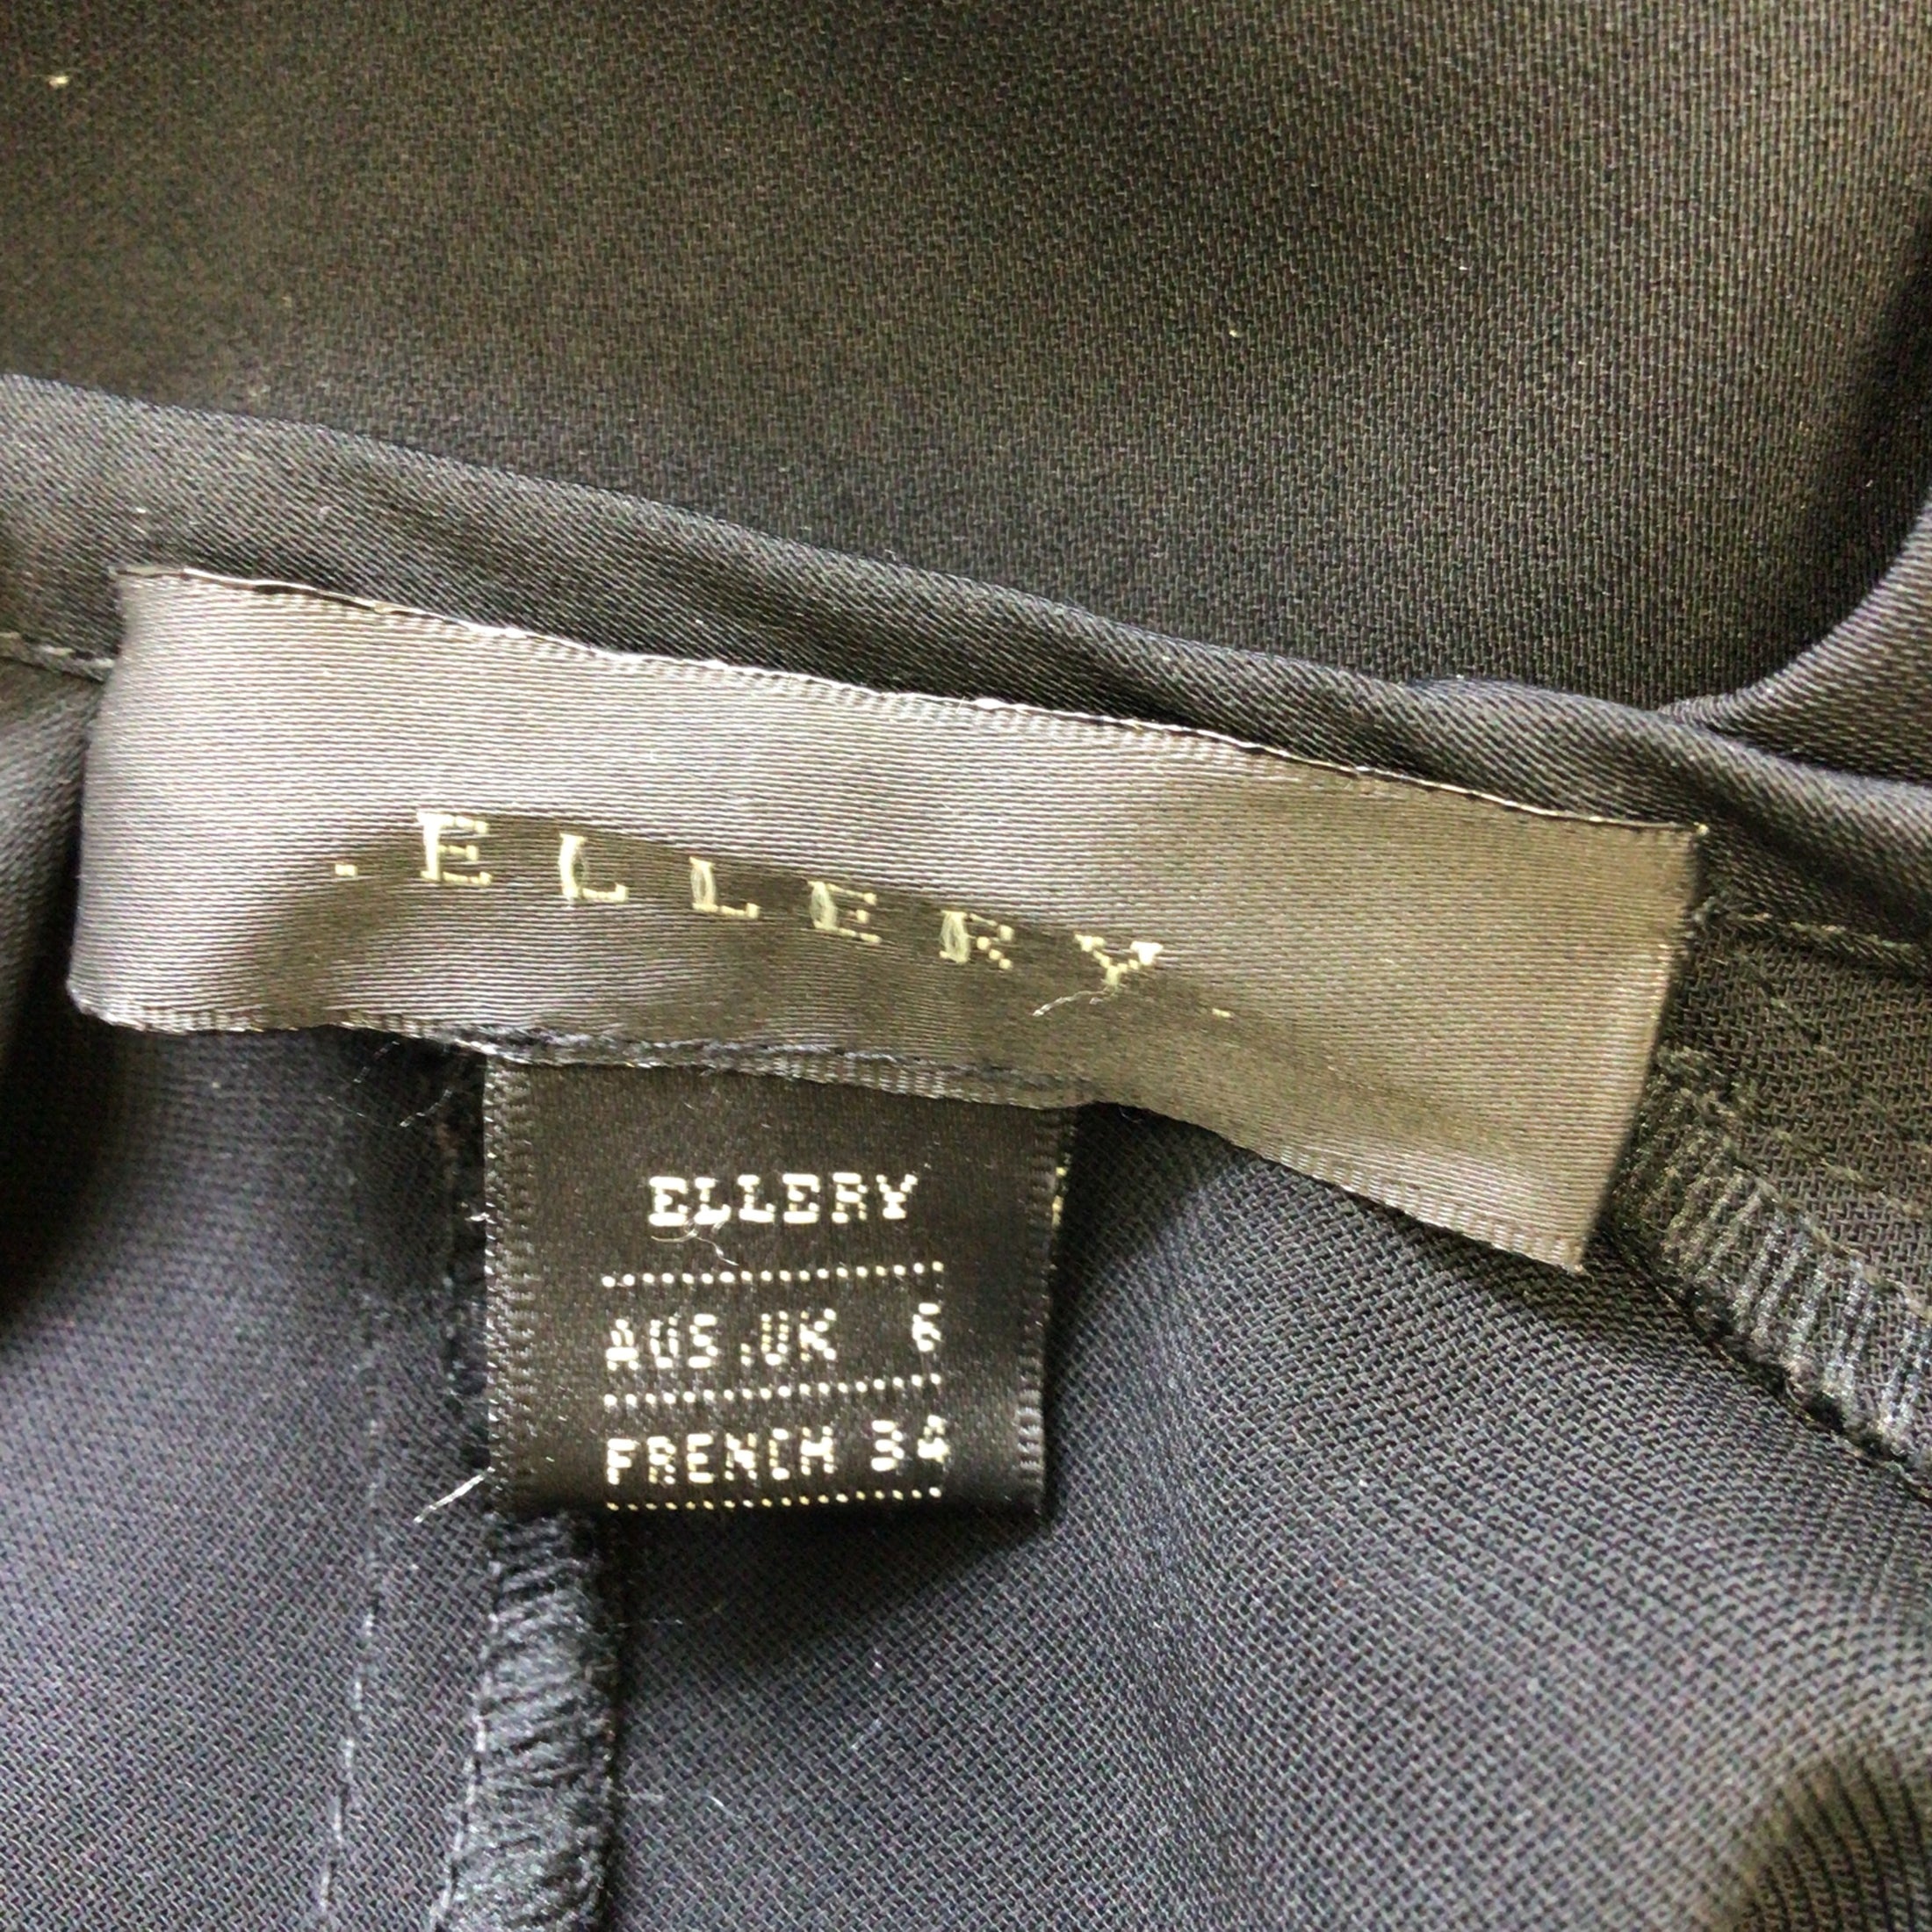 Ellery Black Gathered Short Sleeved Crepe and Silk Satin Dress